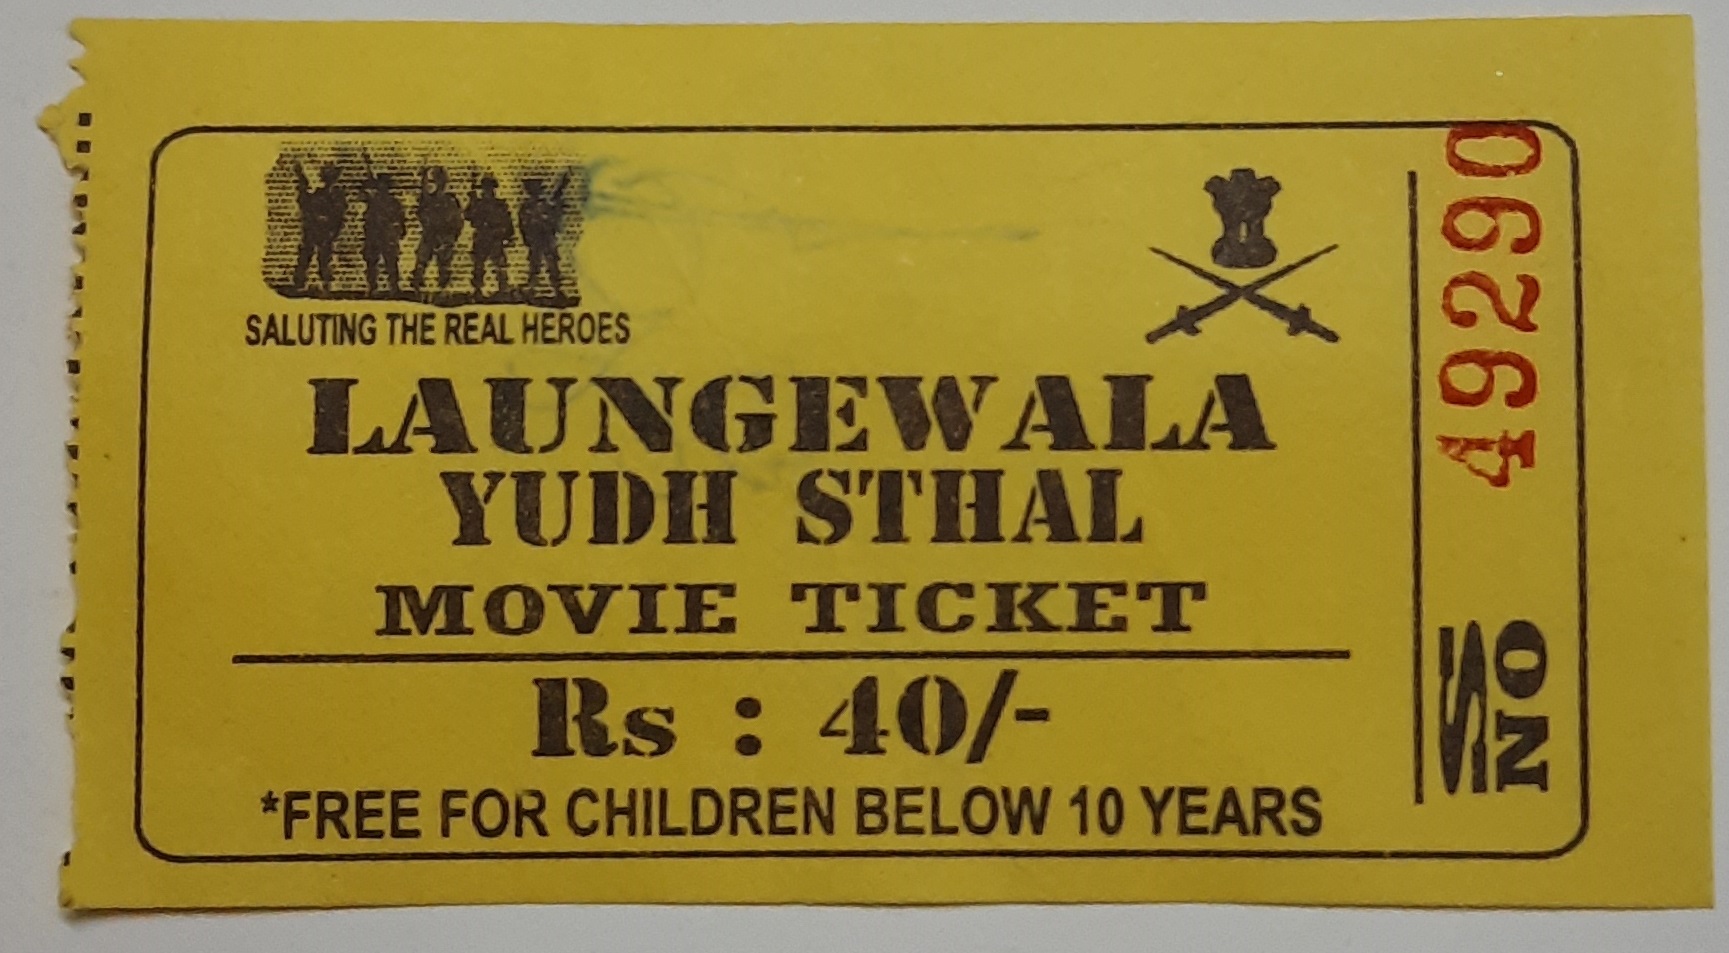 Movie ticket for Longewala War film 